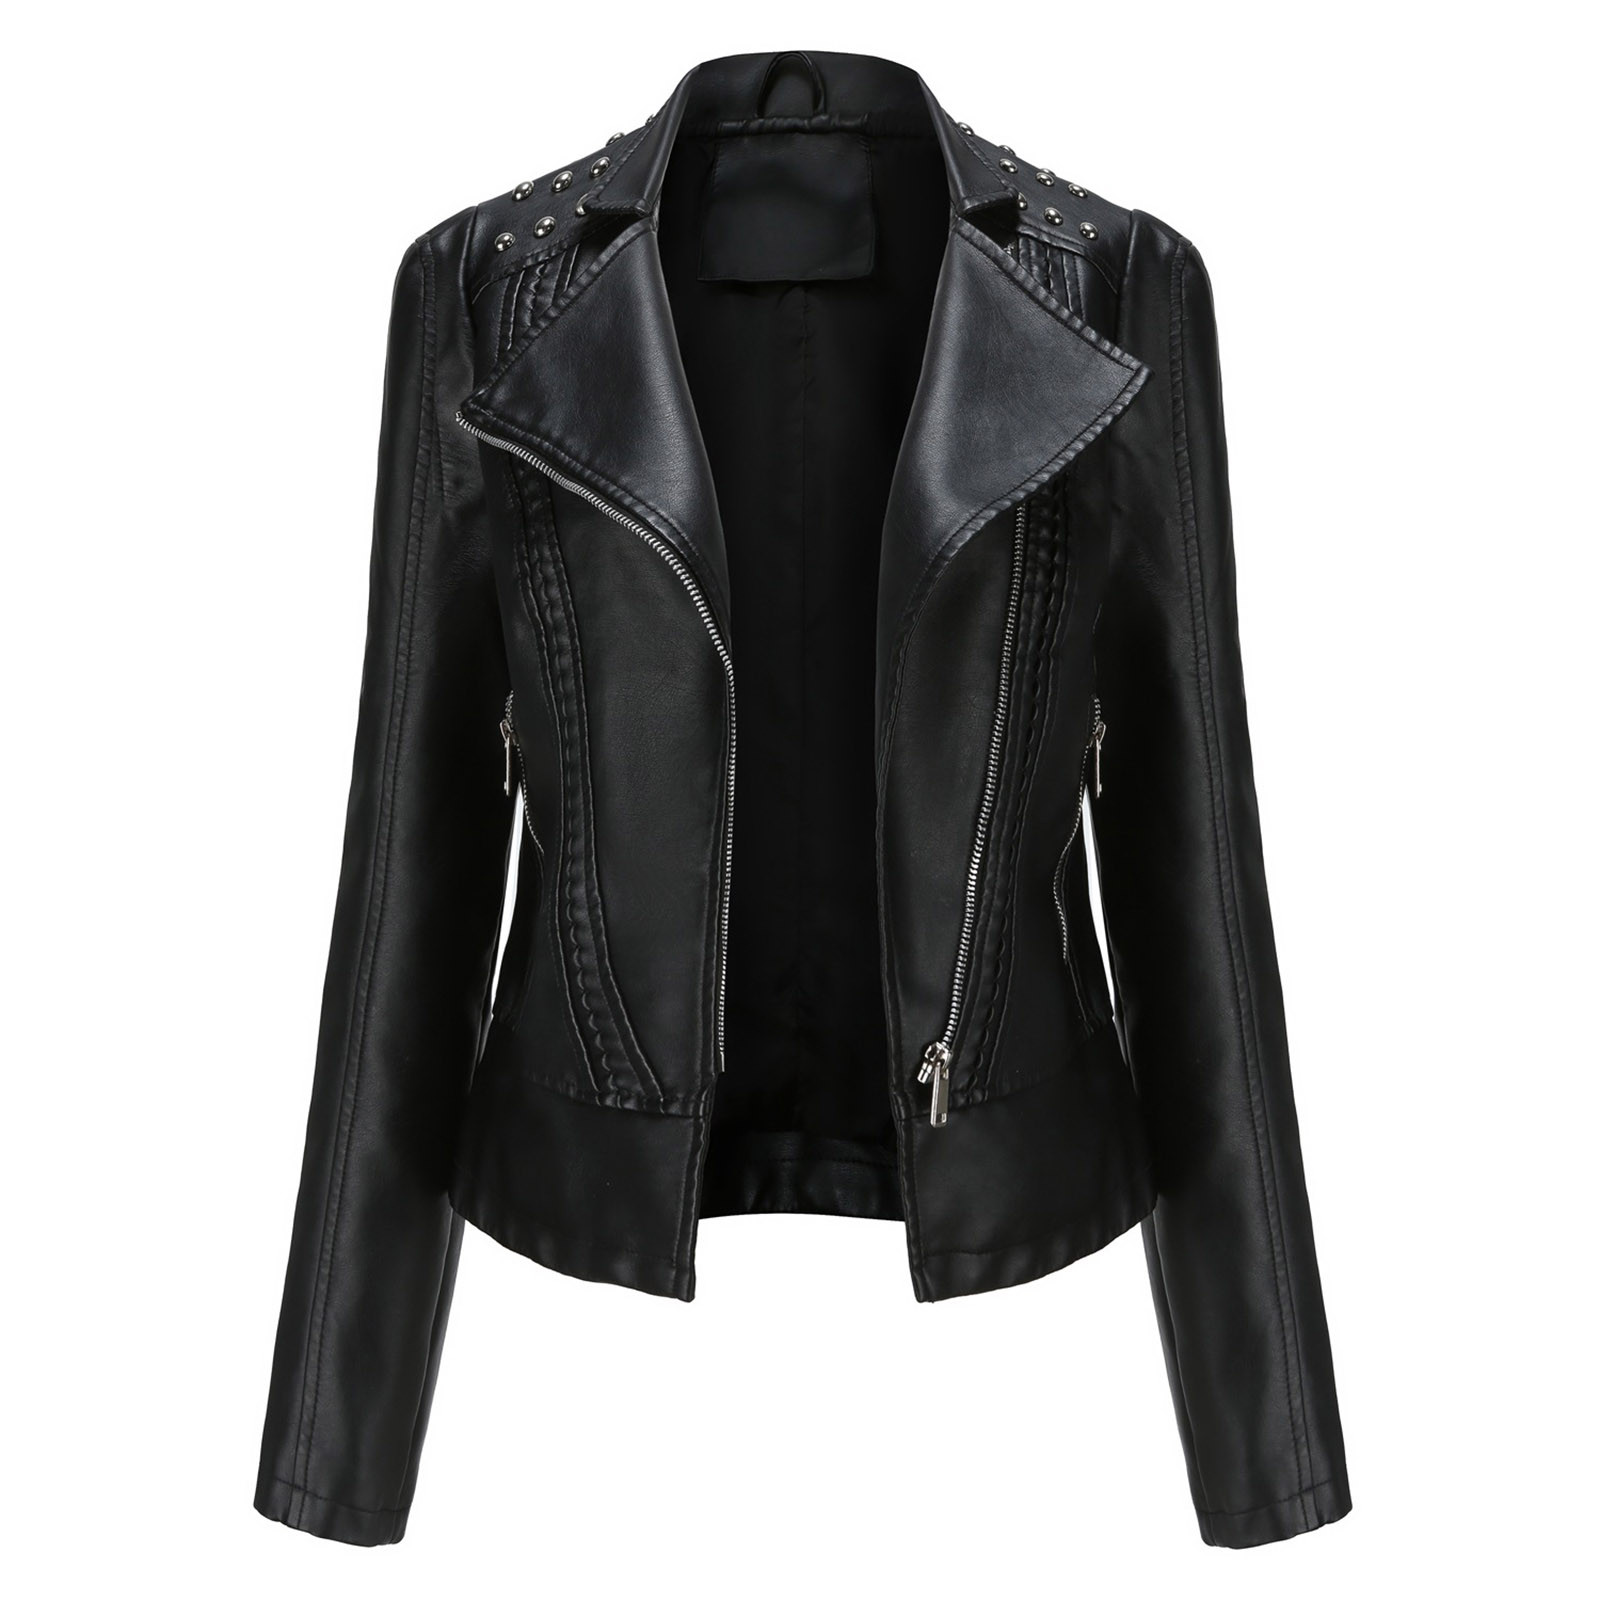 Leather Jacket for Women Fashion Faux Leather Zipper Motorcycle Jacket Plus Size Leather Tops Moto Biker Short - image 1 of 7